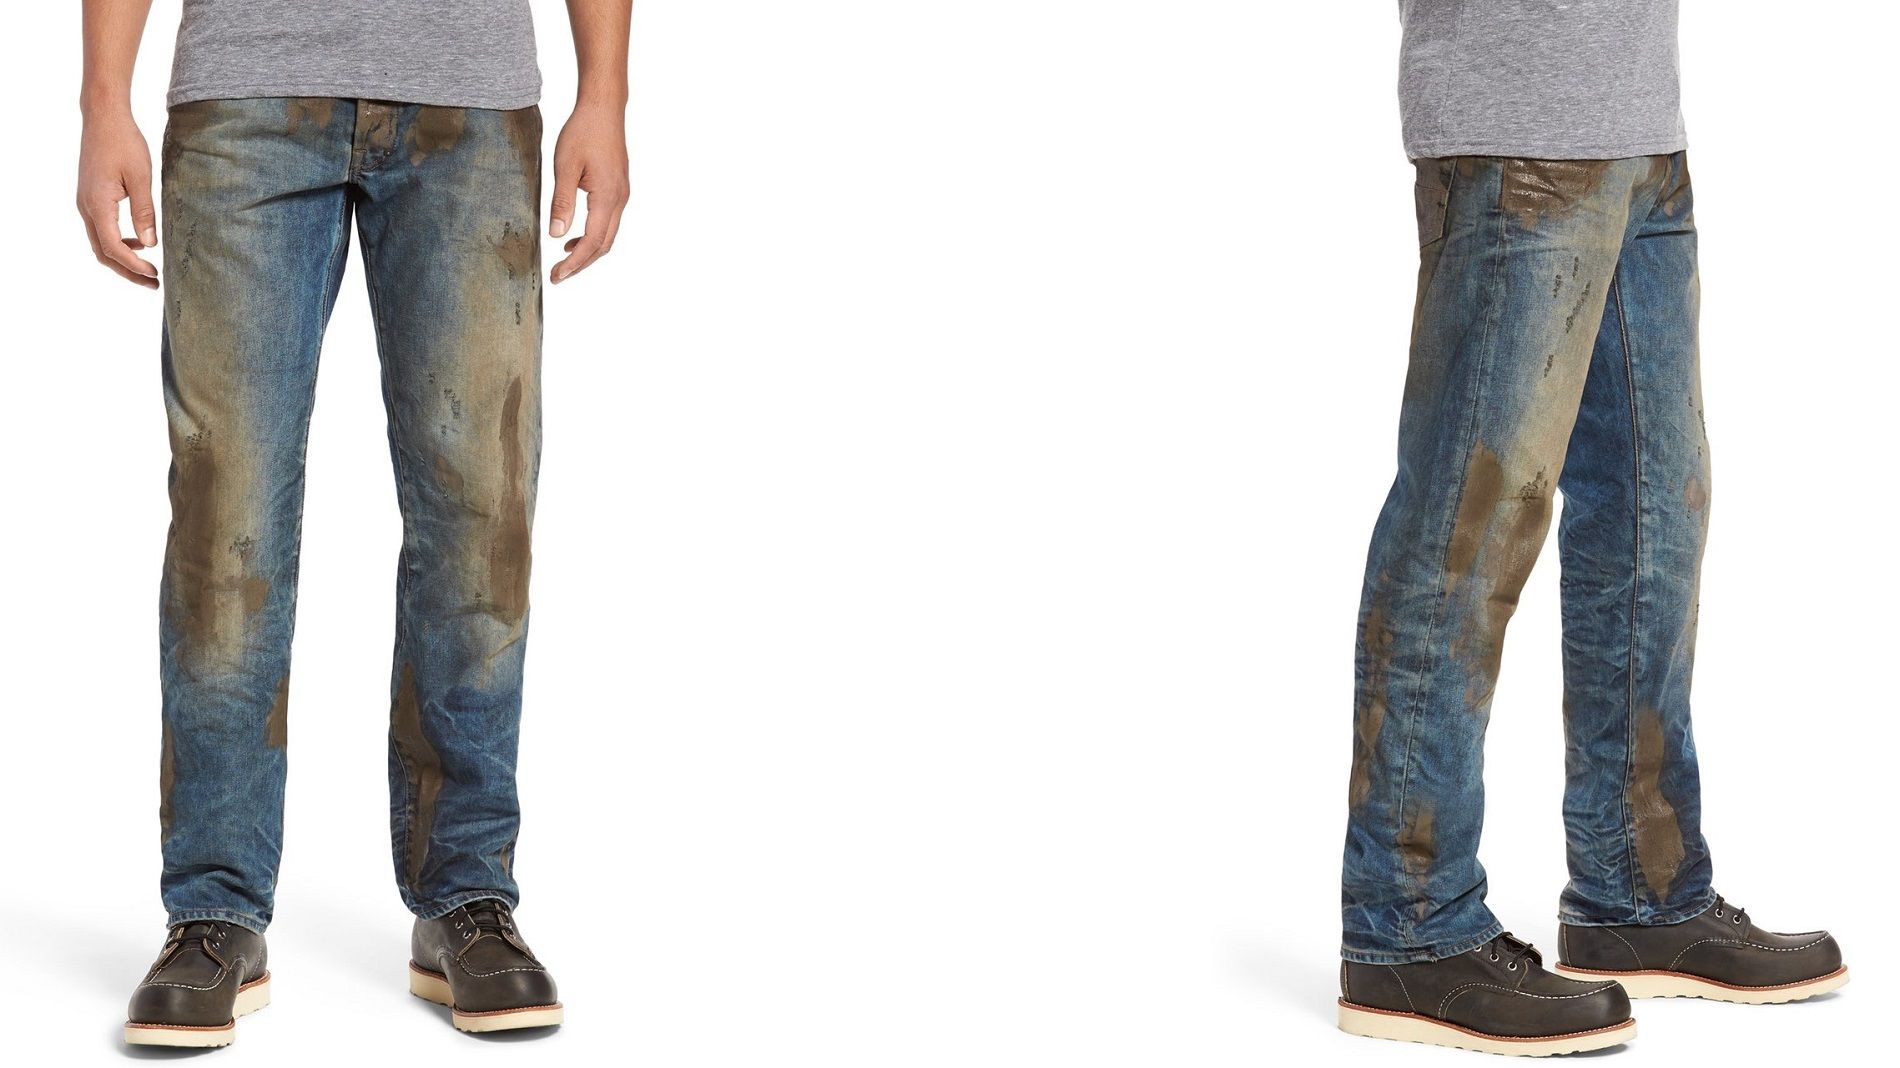 Comprereste mai dei jeans venduti già sporchi di fango?